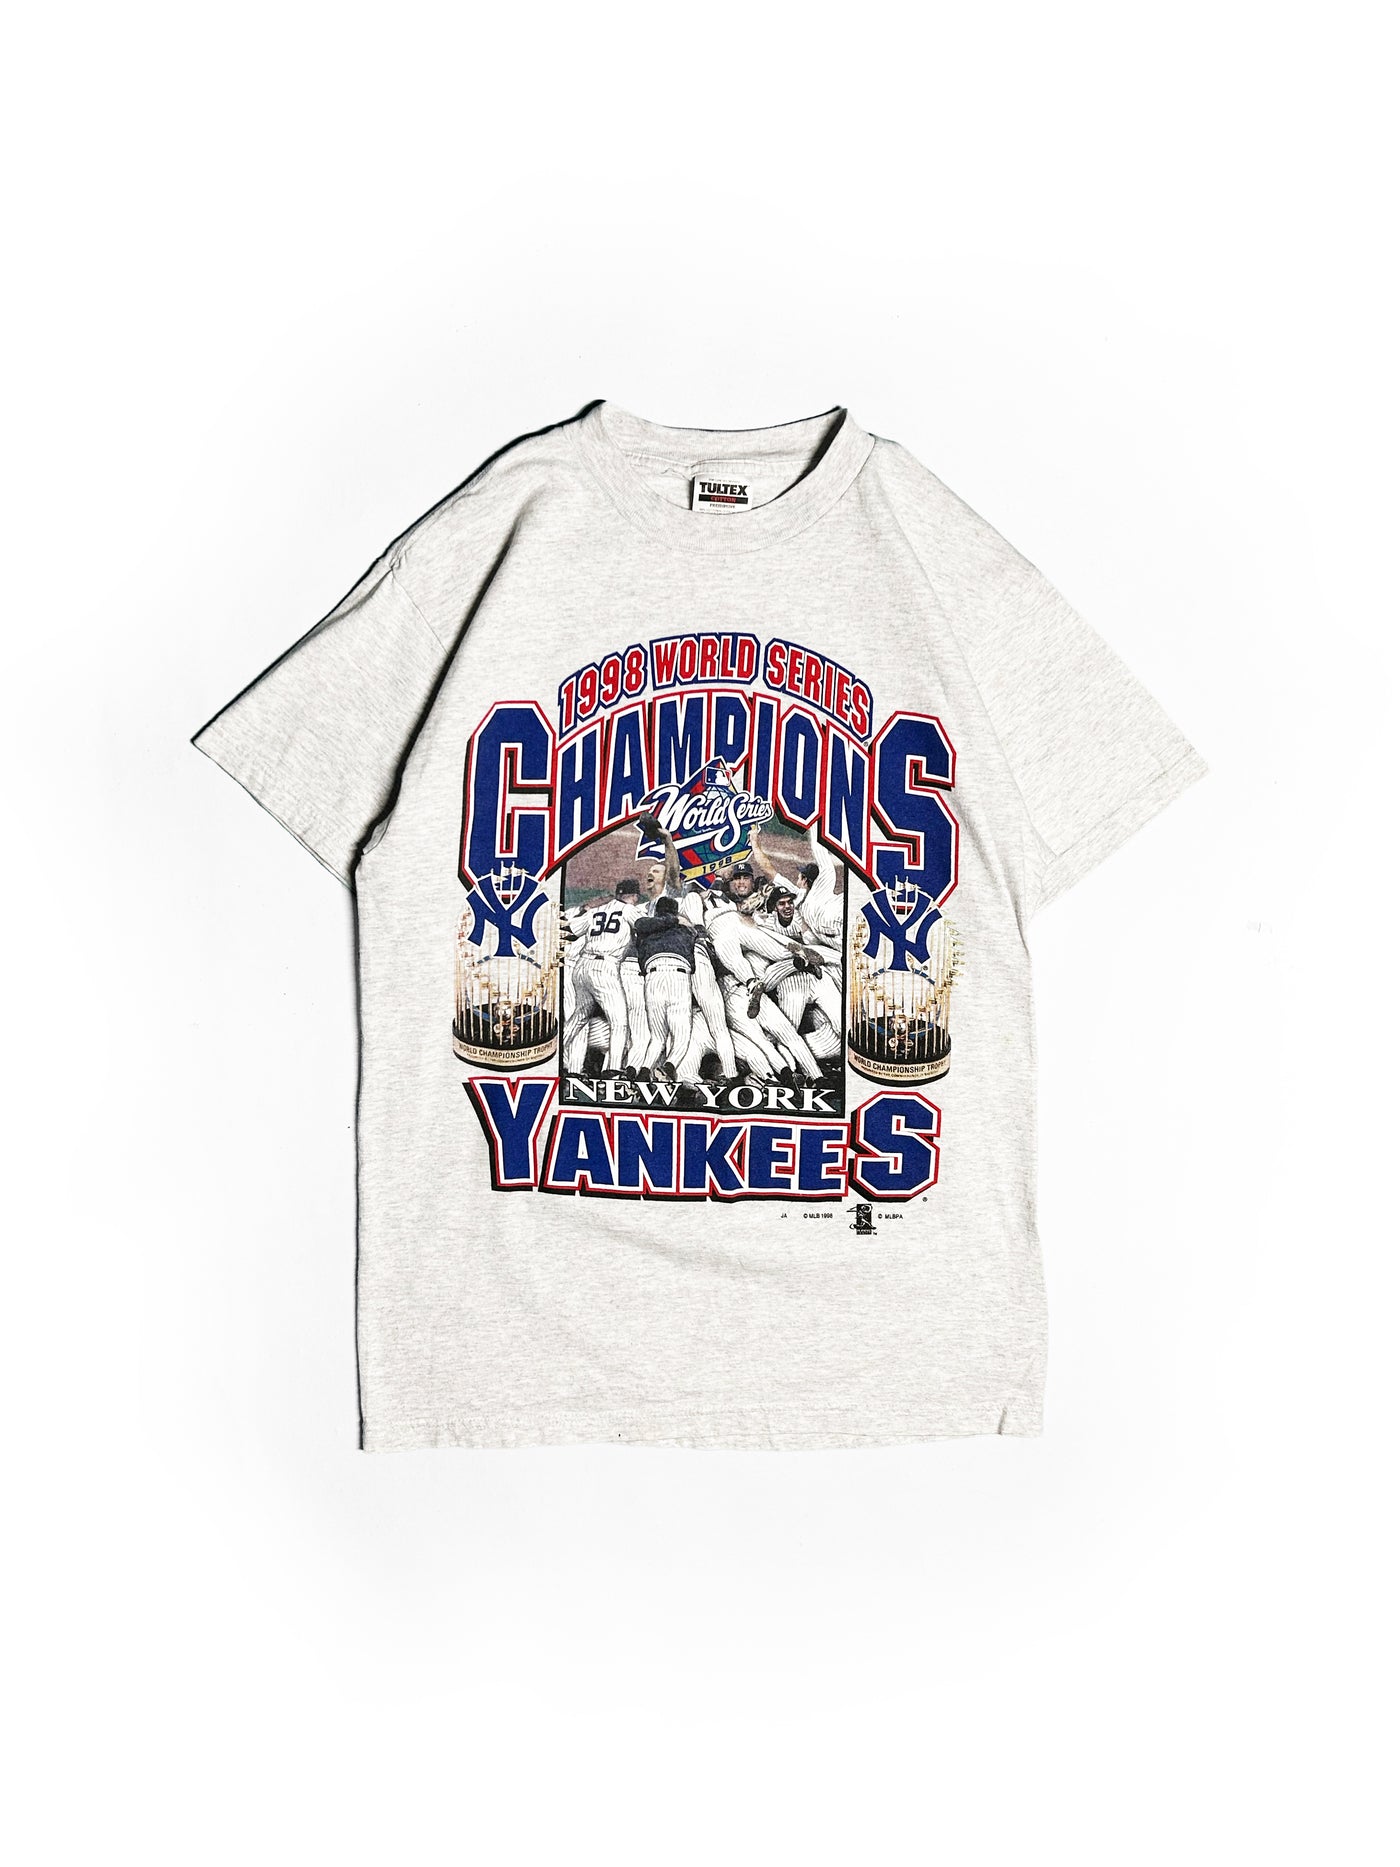 Vintage 1998 New York Yankees World Series Champions T-Shirt